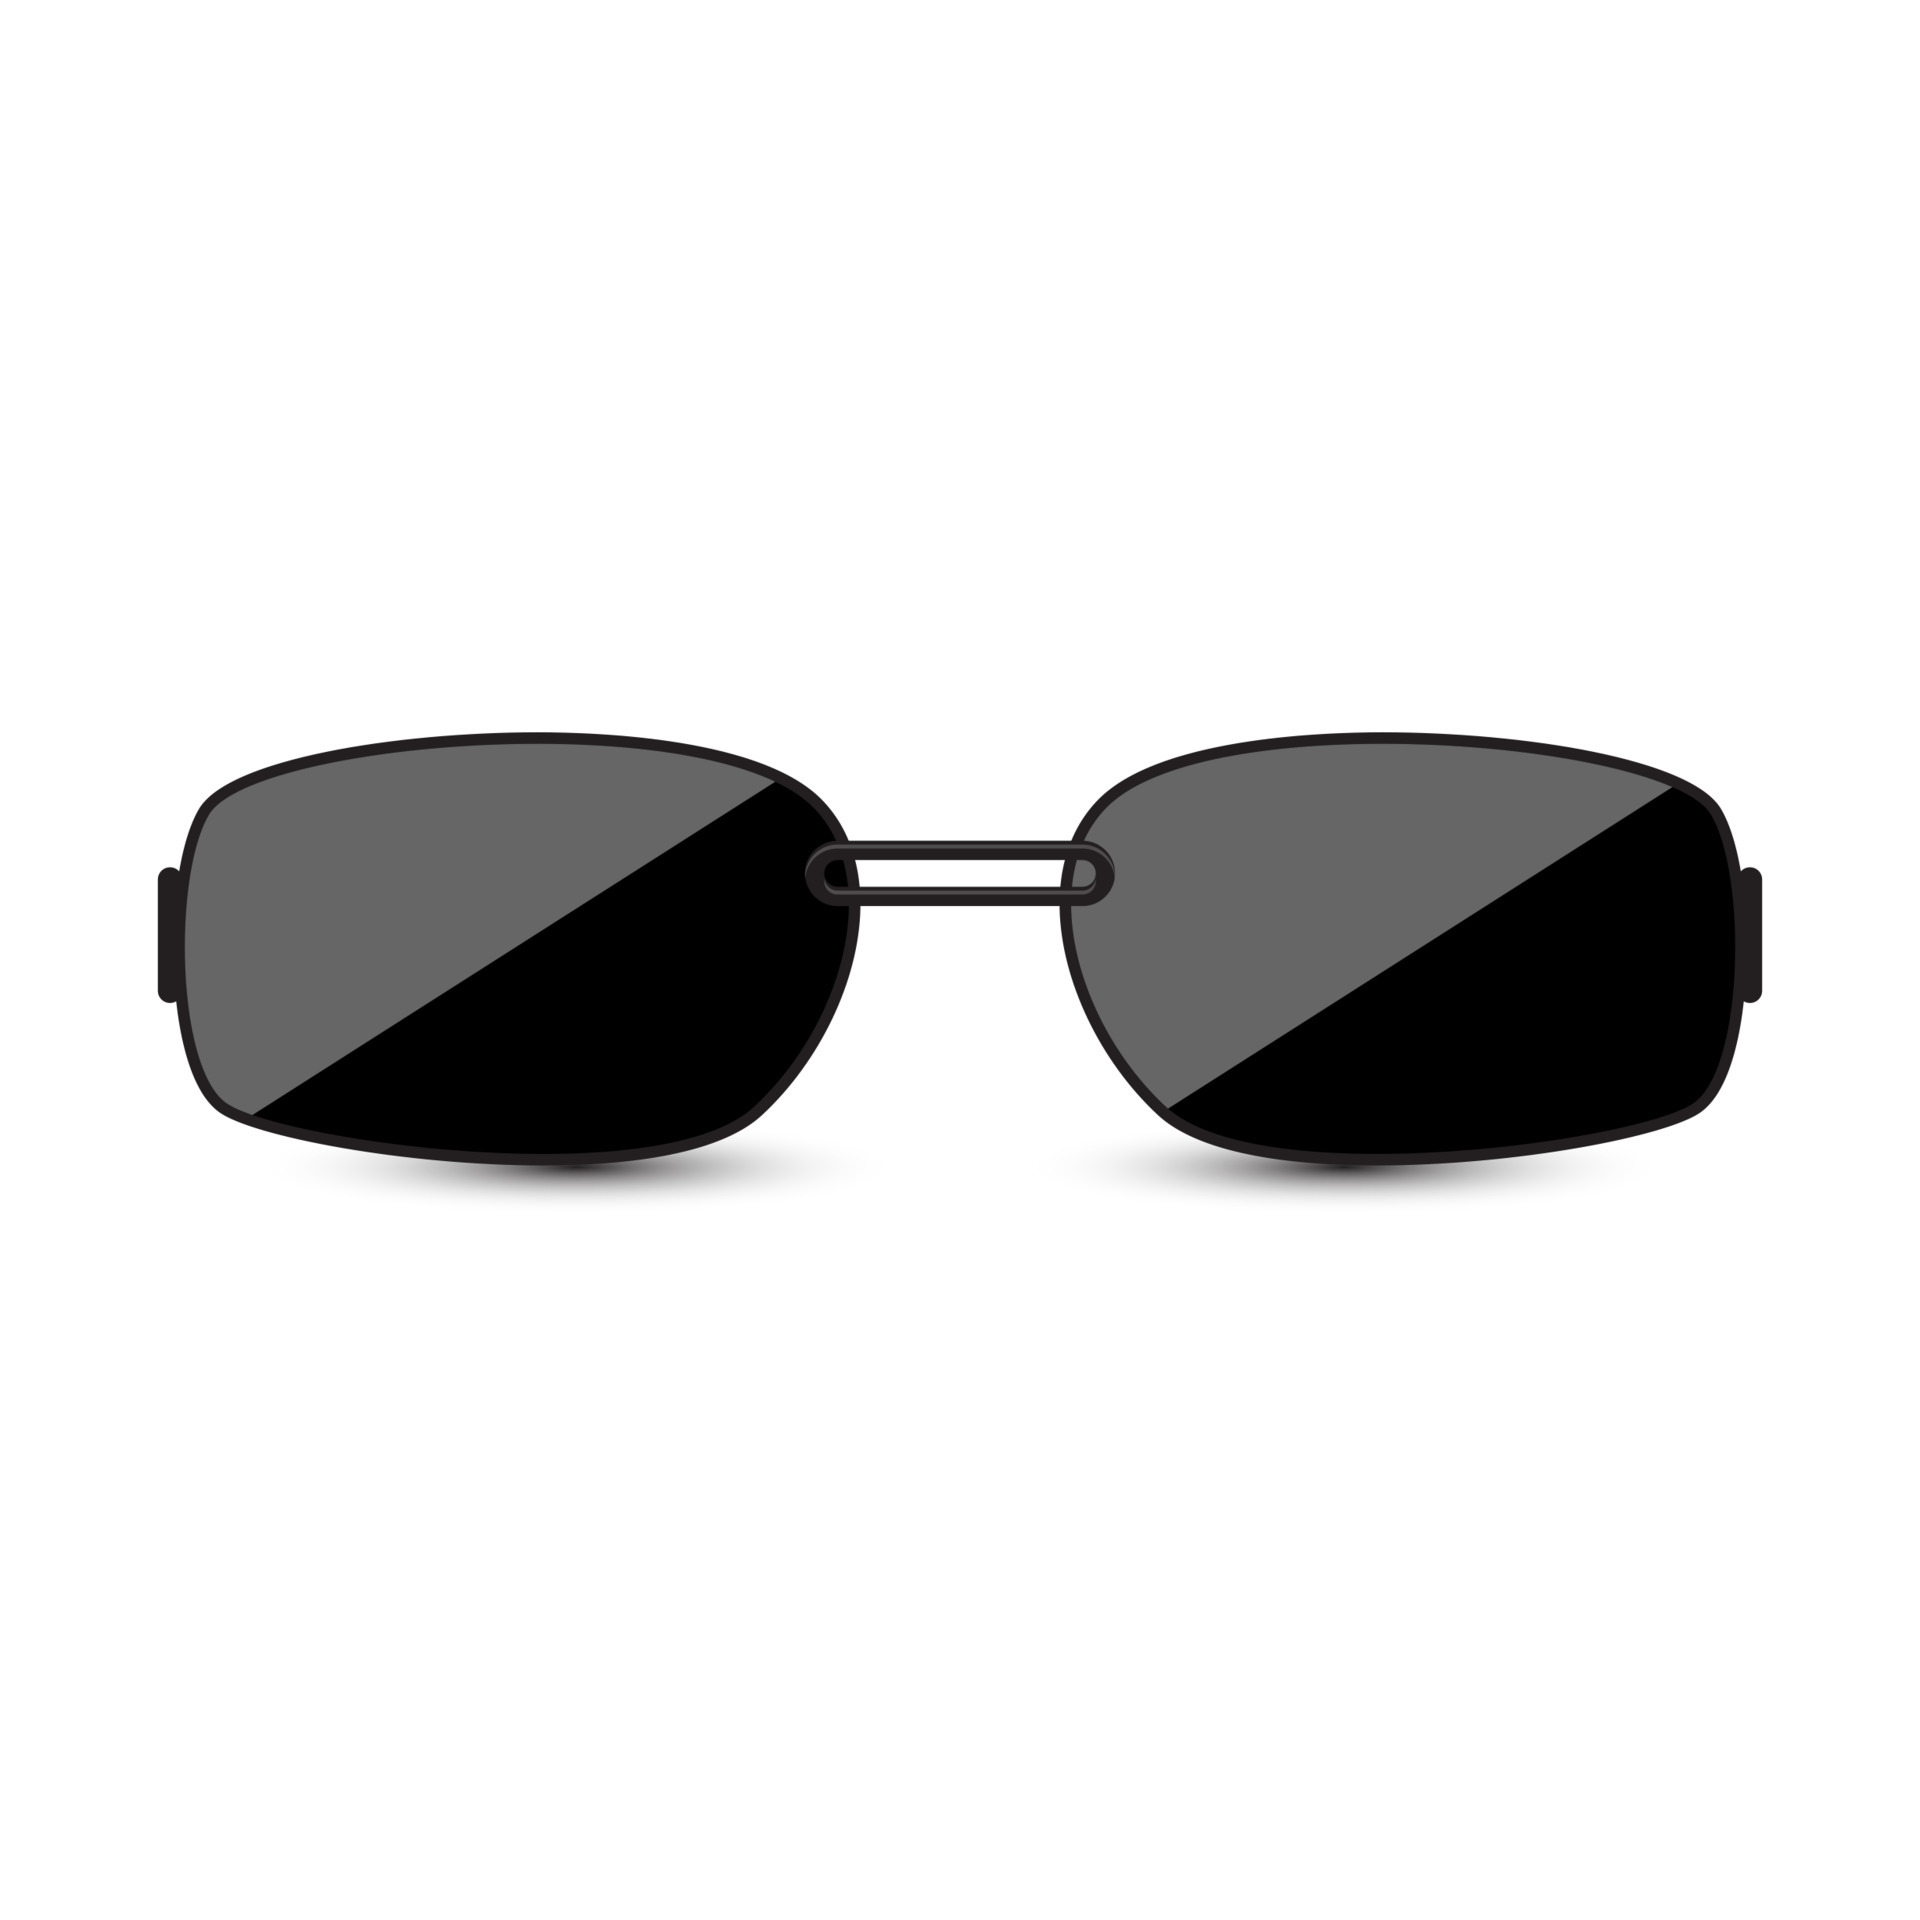 Black modern sunglasses with dark glass on white background. 6457185 ...